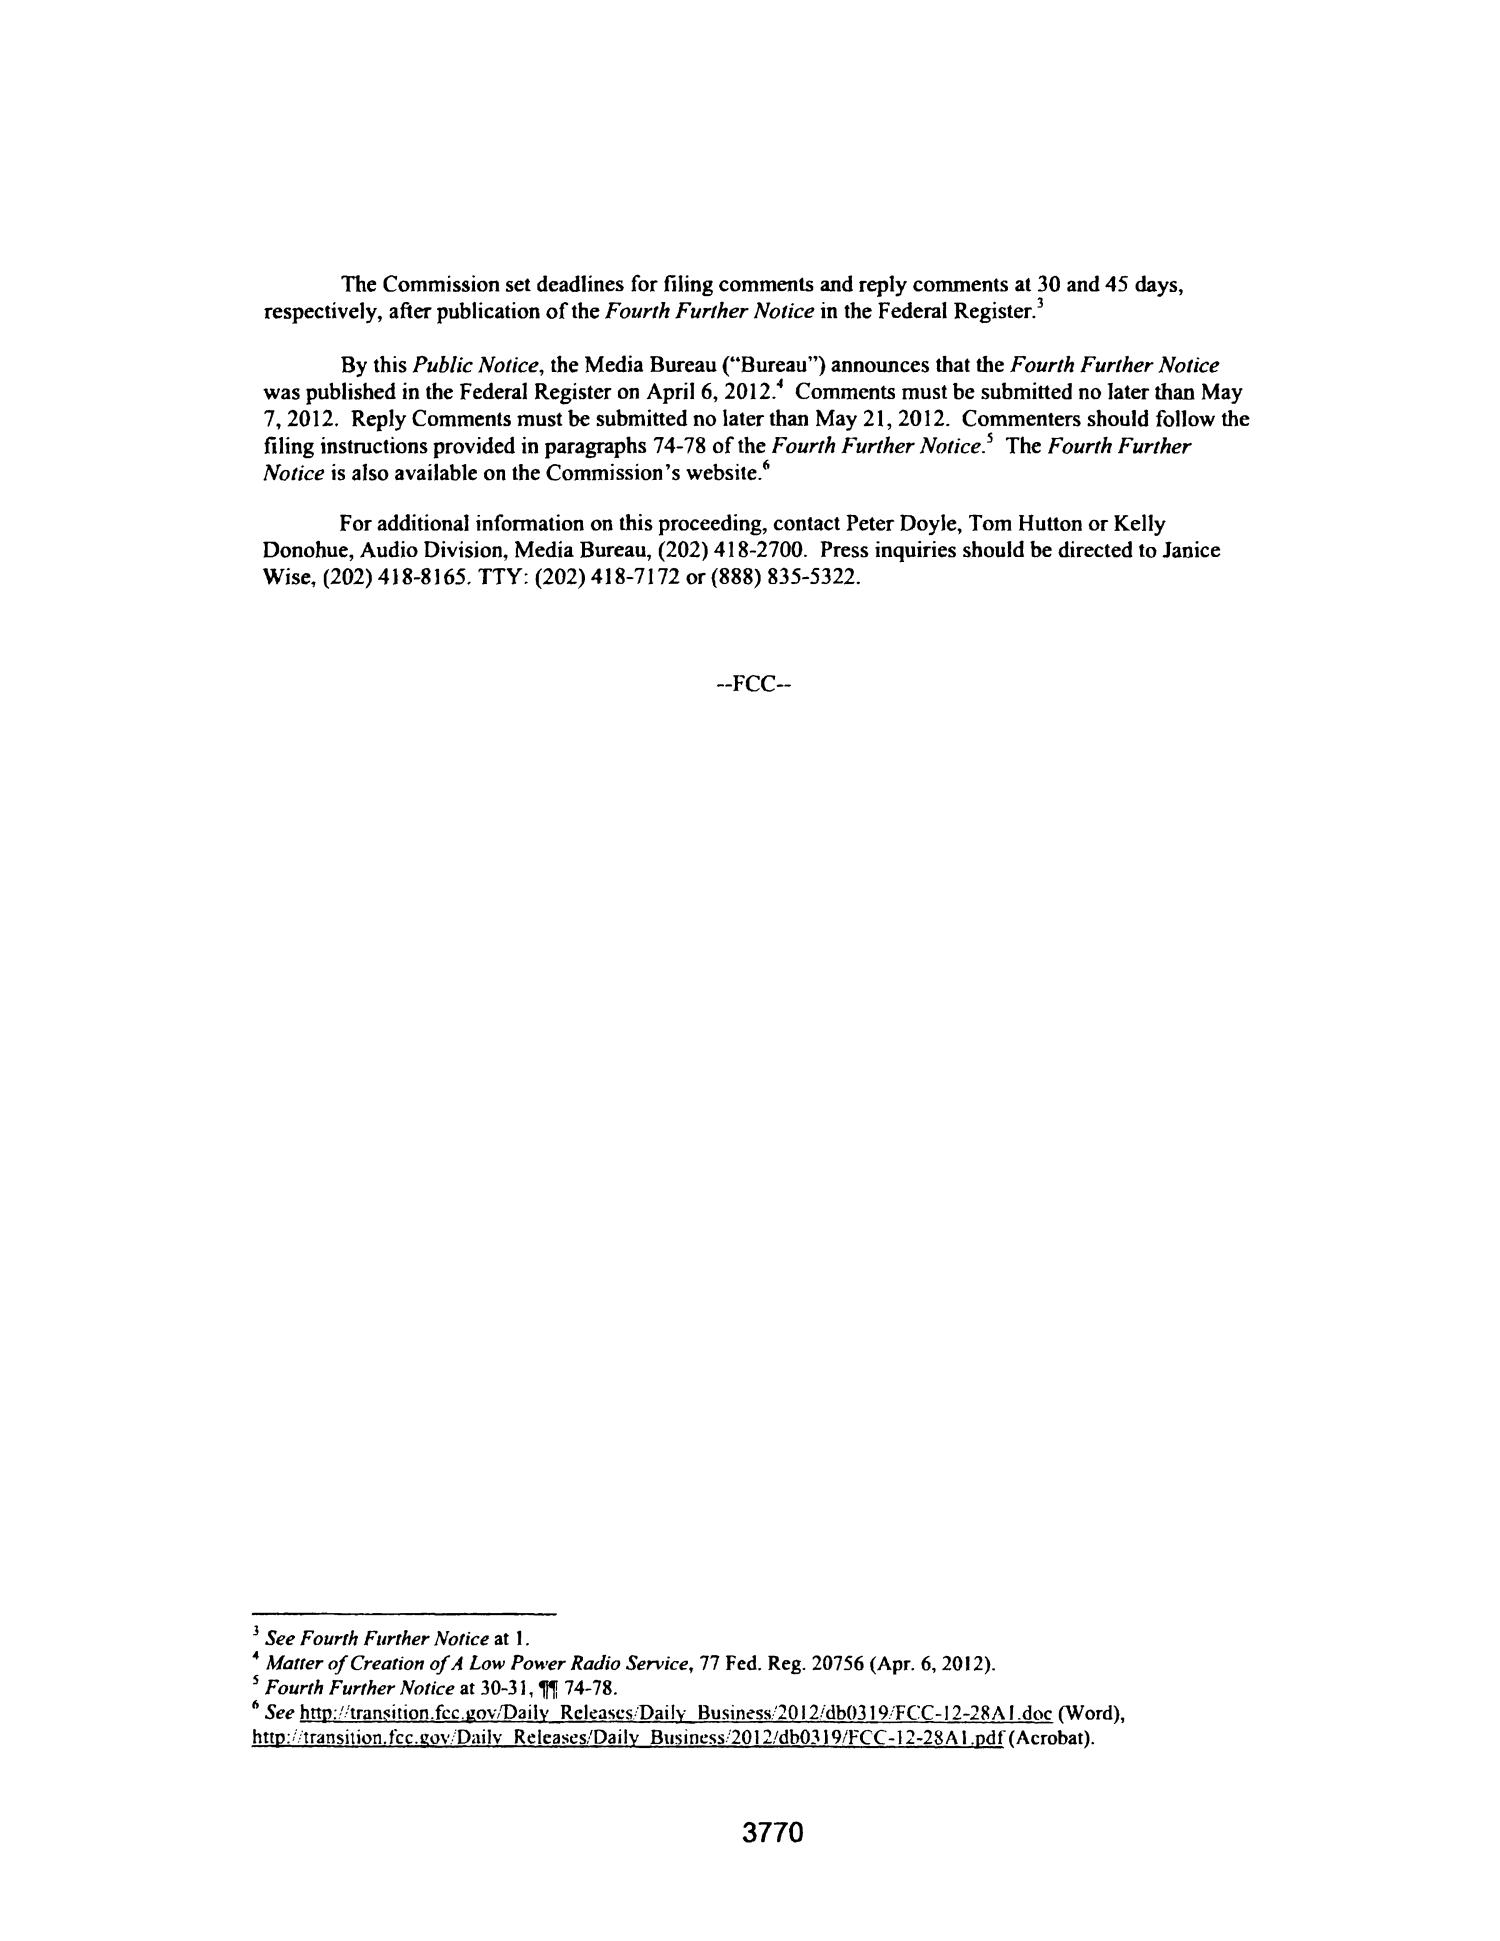 FCC Record, Volume 27, No. 5, Pages 3728 to 4696, April 9 - April 27, 2012
                                                
                                                    3770
                                                